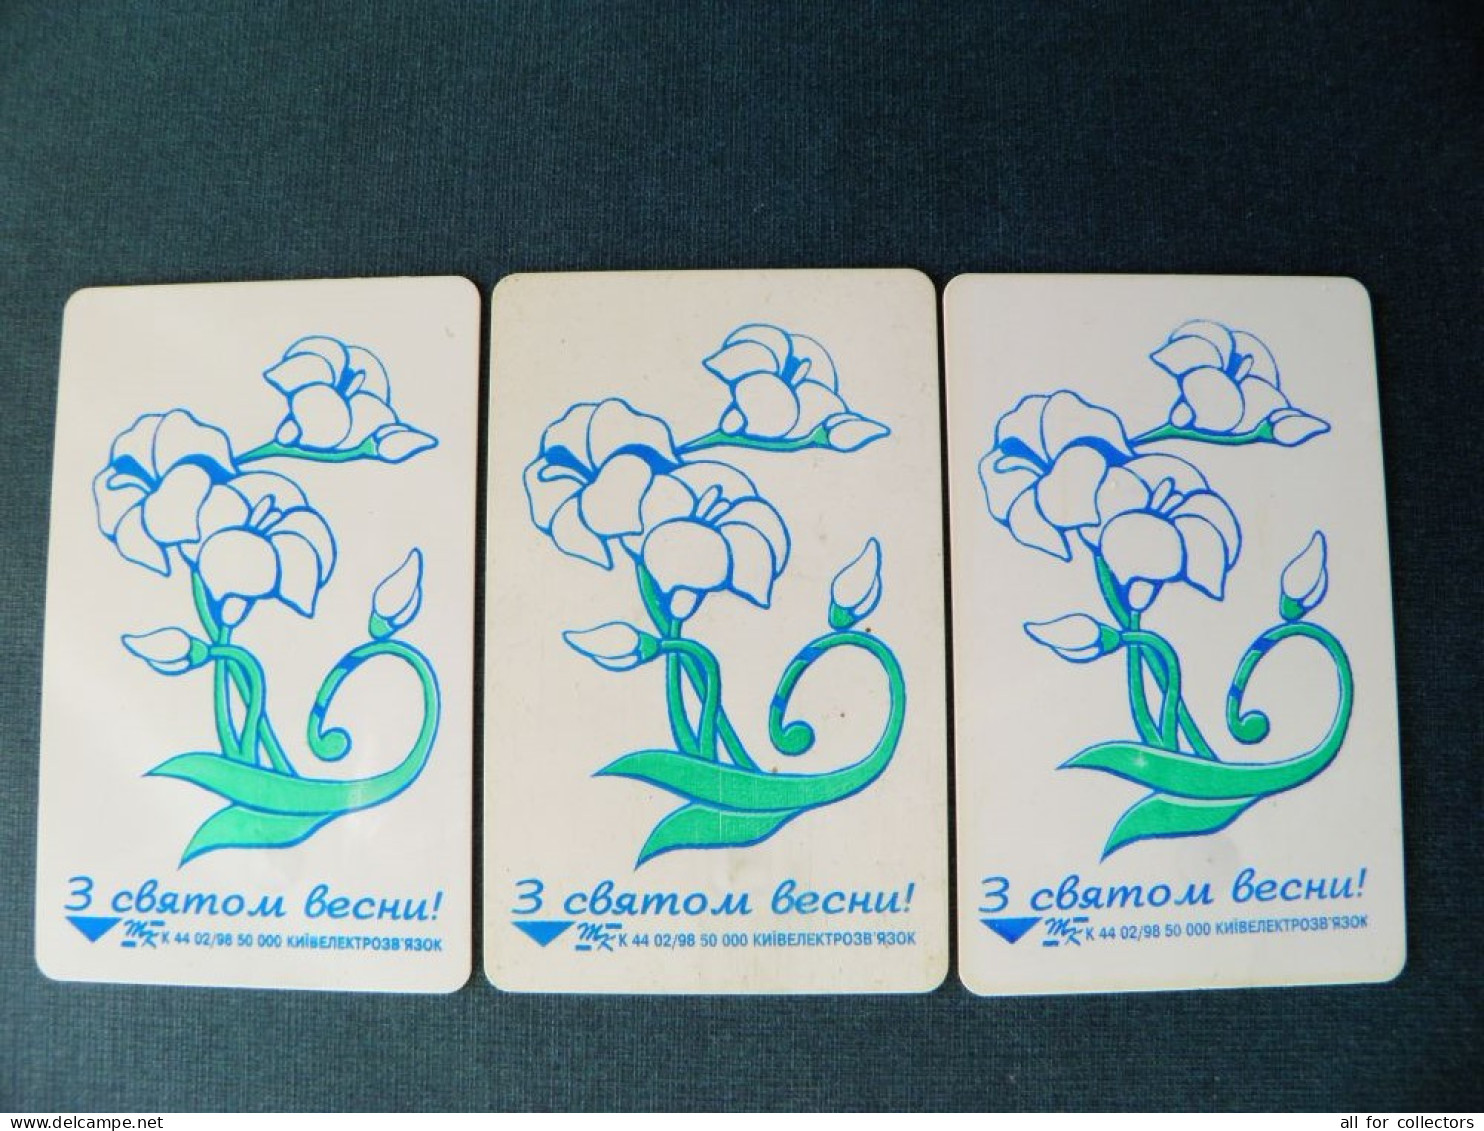 3 Different Cards Phonecard Chip Flowers Spring  K44 02/98 30,000ex. 1680 Units Prefix Nr. BV EZh GD UKRAINE - Ukraine